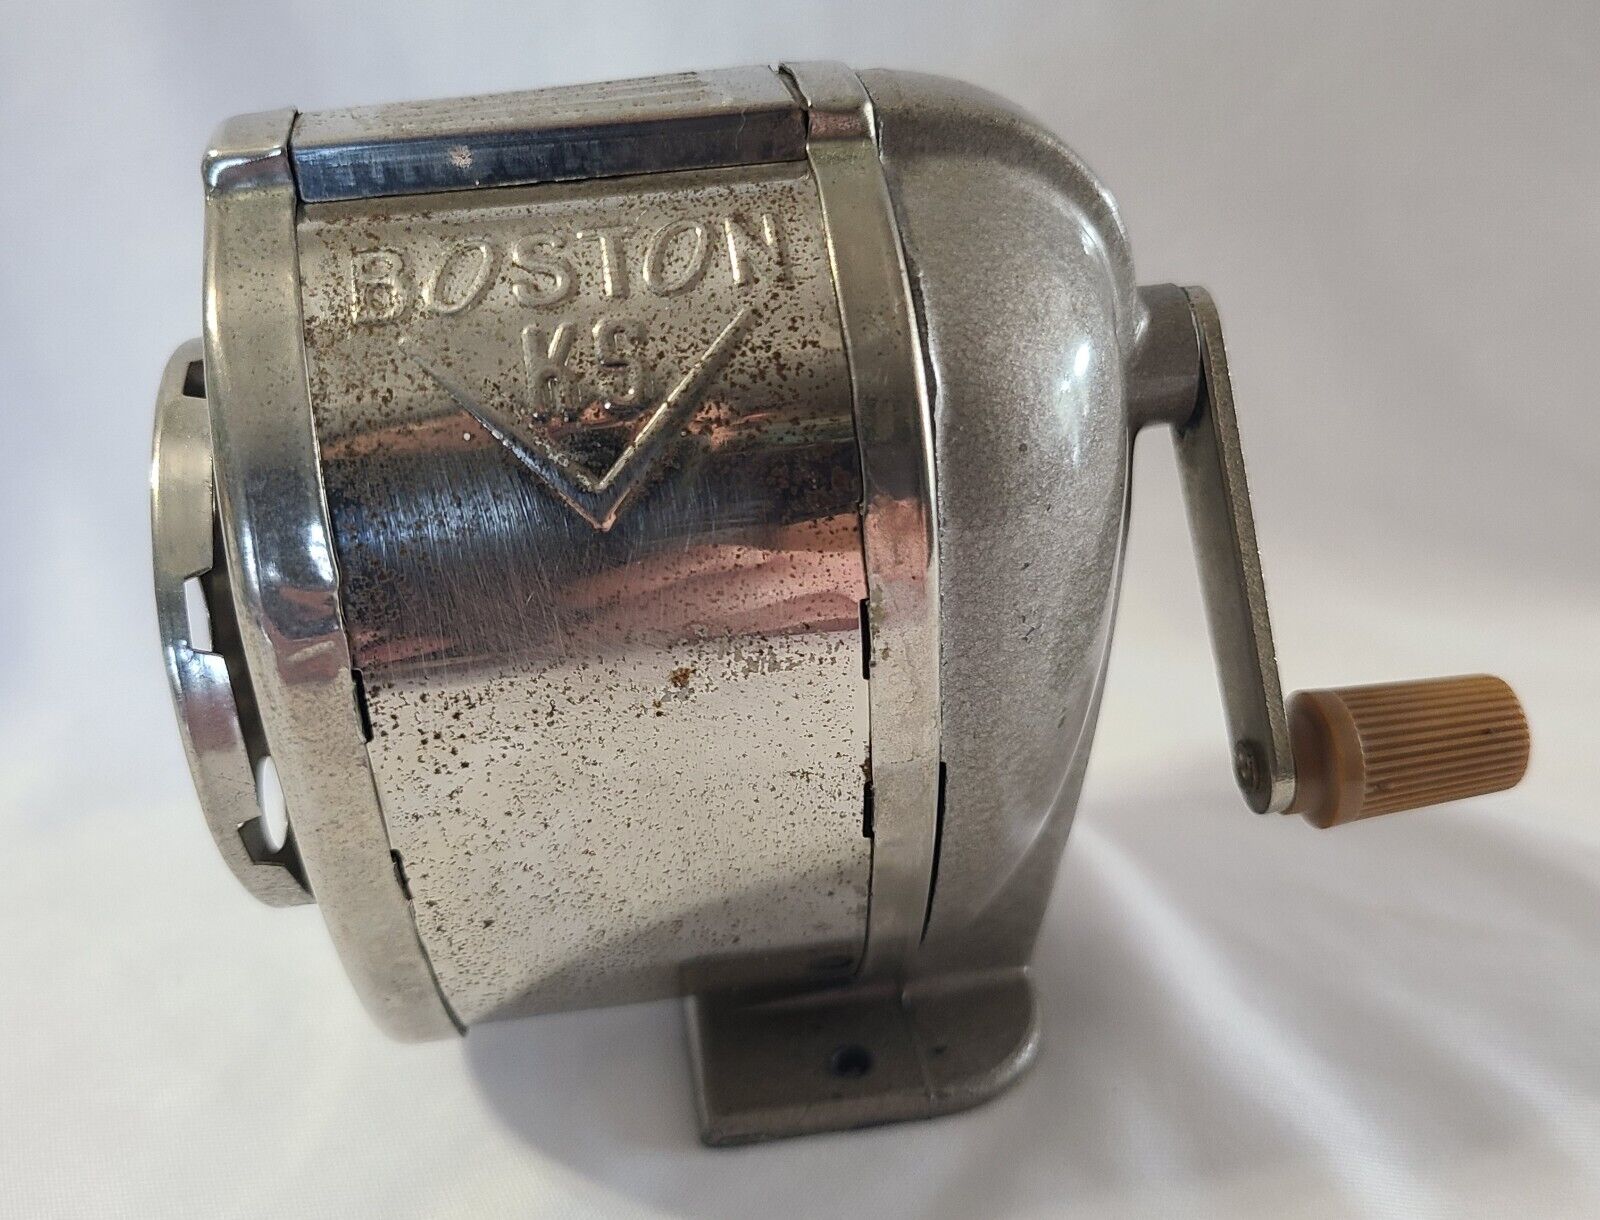 Vintage - Boston Pencil Sharpener - KS Model 8 Hole Wall or Table Mount Working